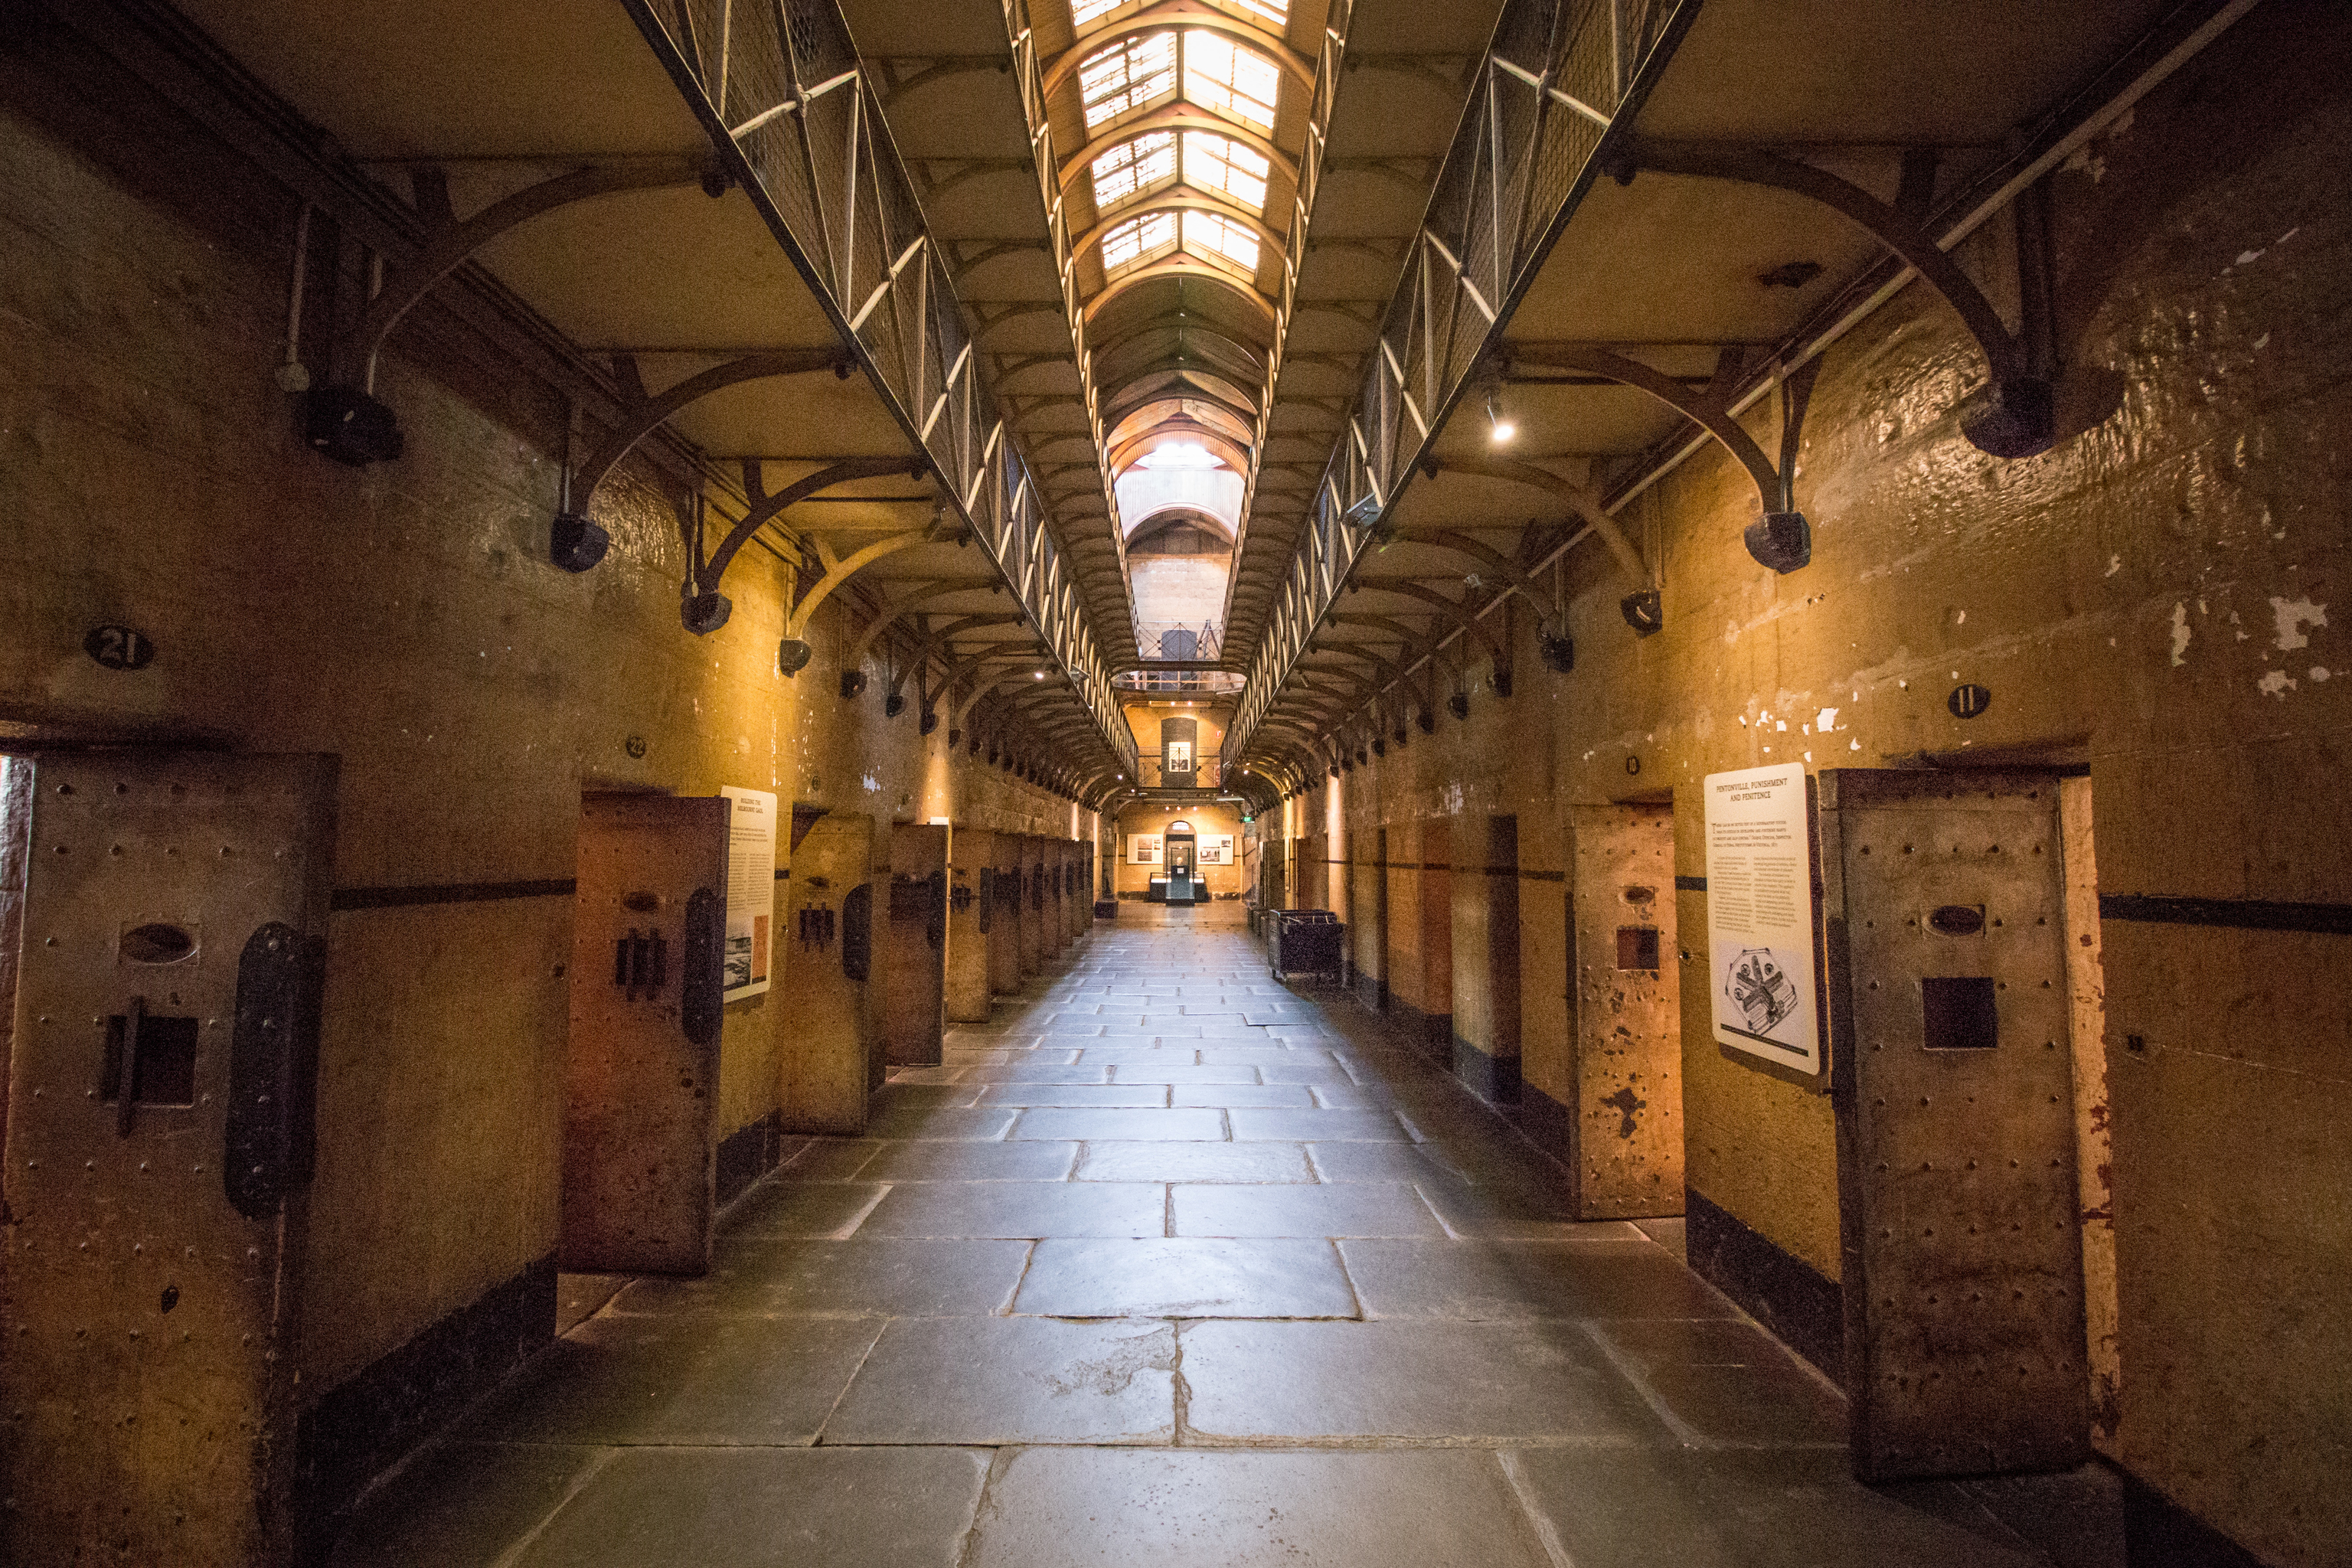 Old Melbourne Gaol